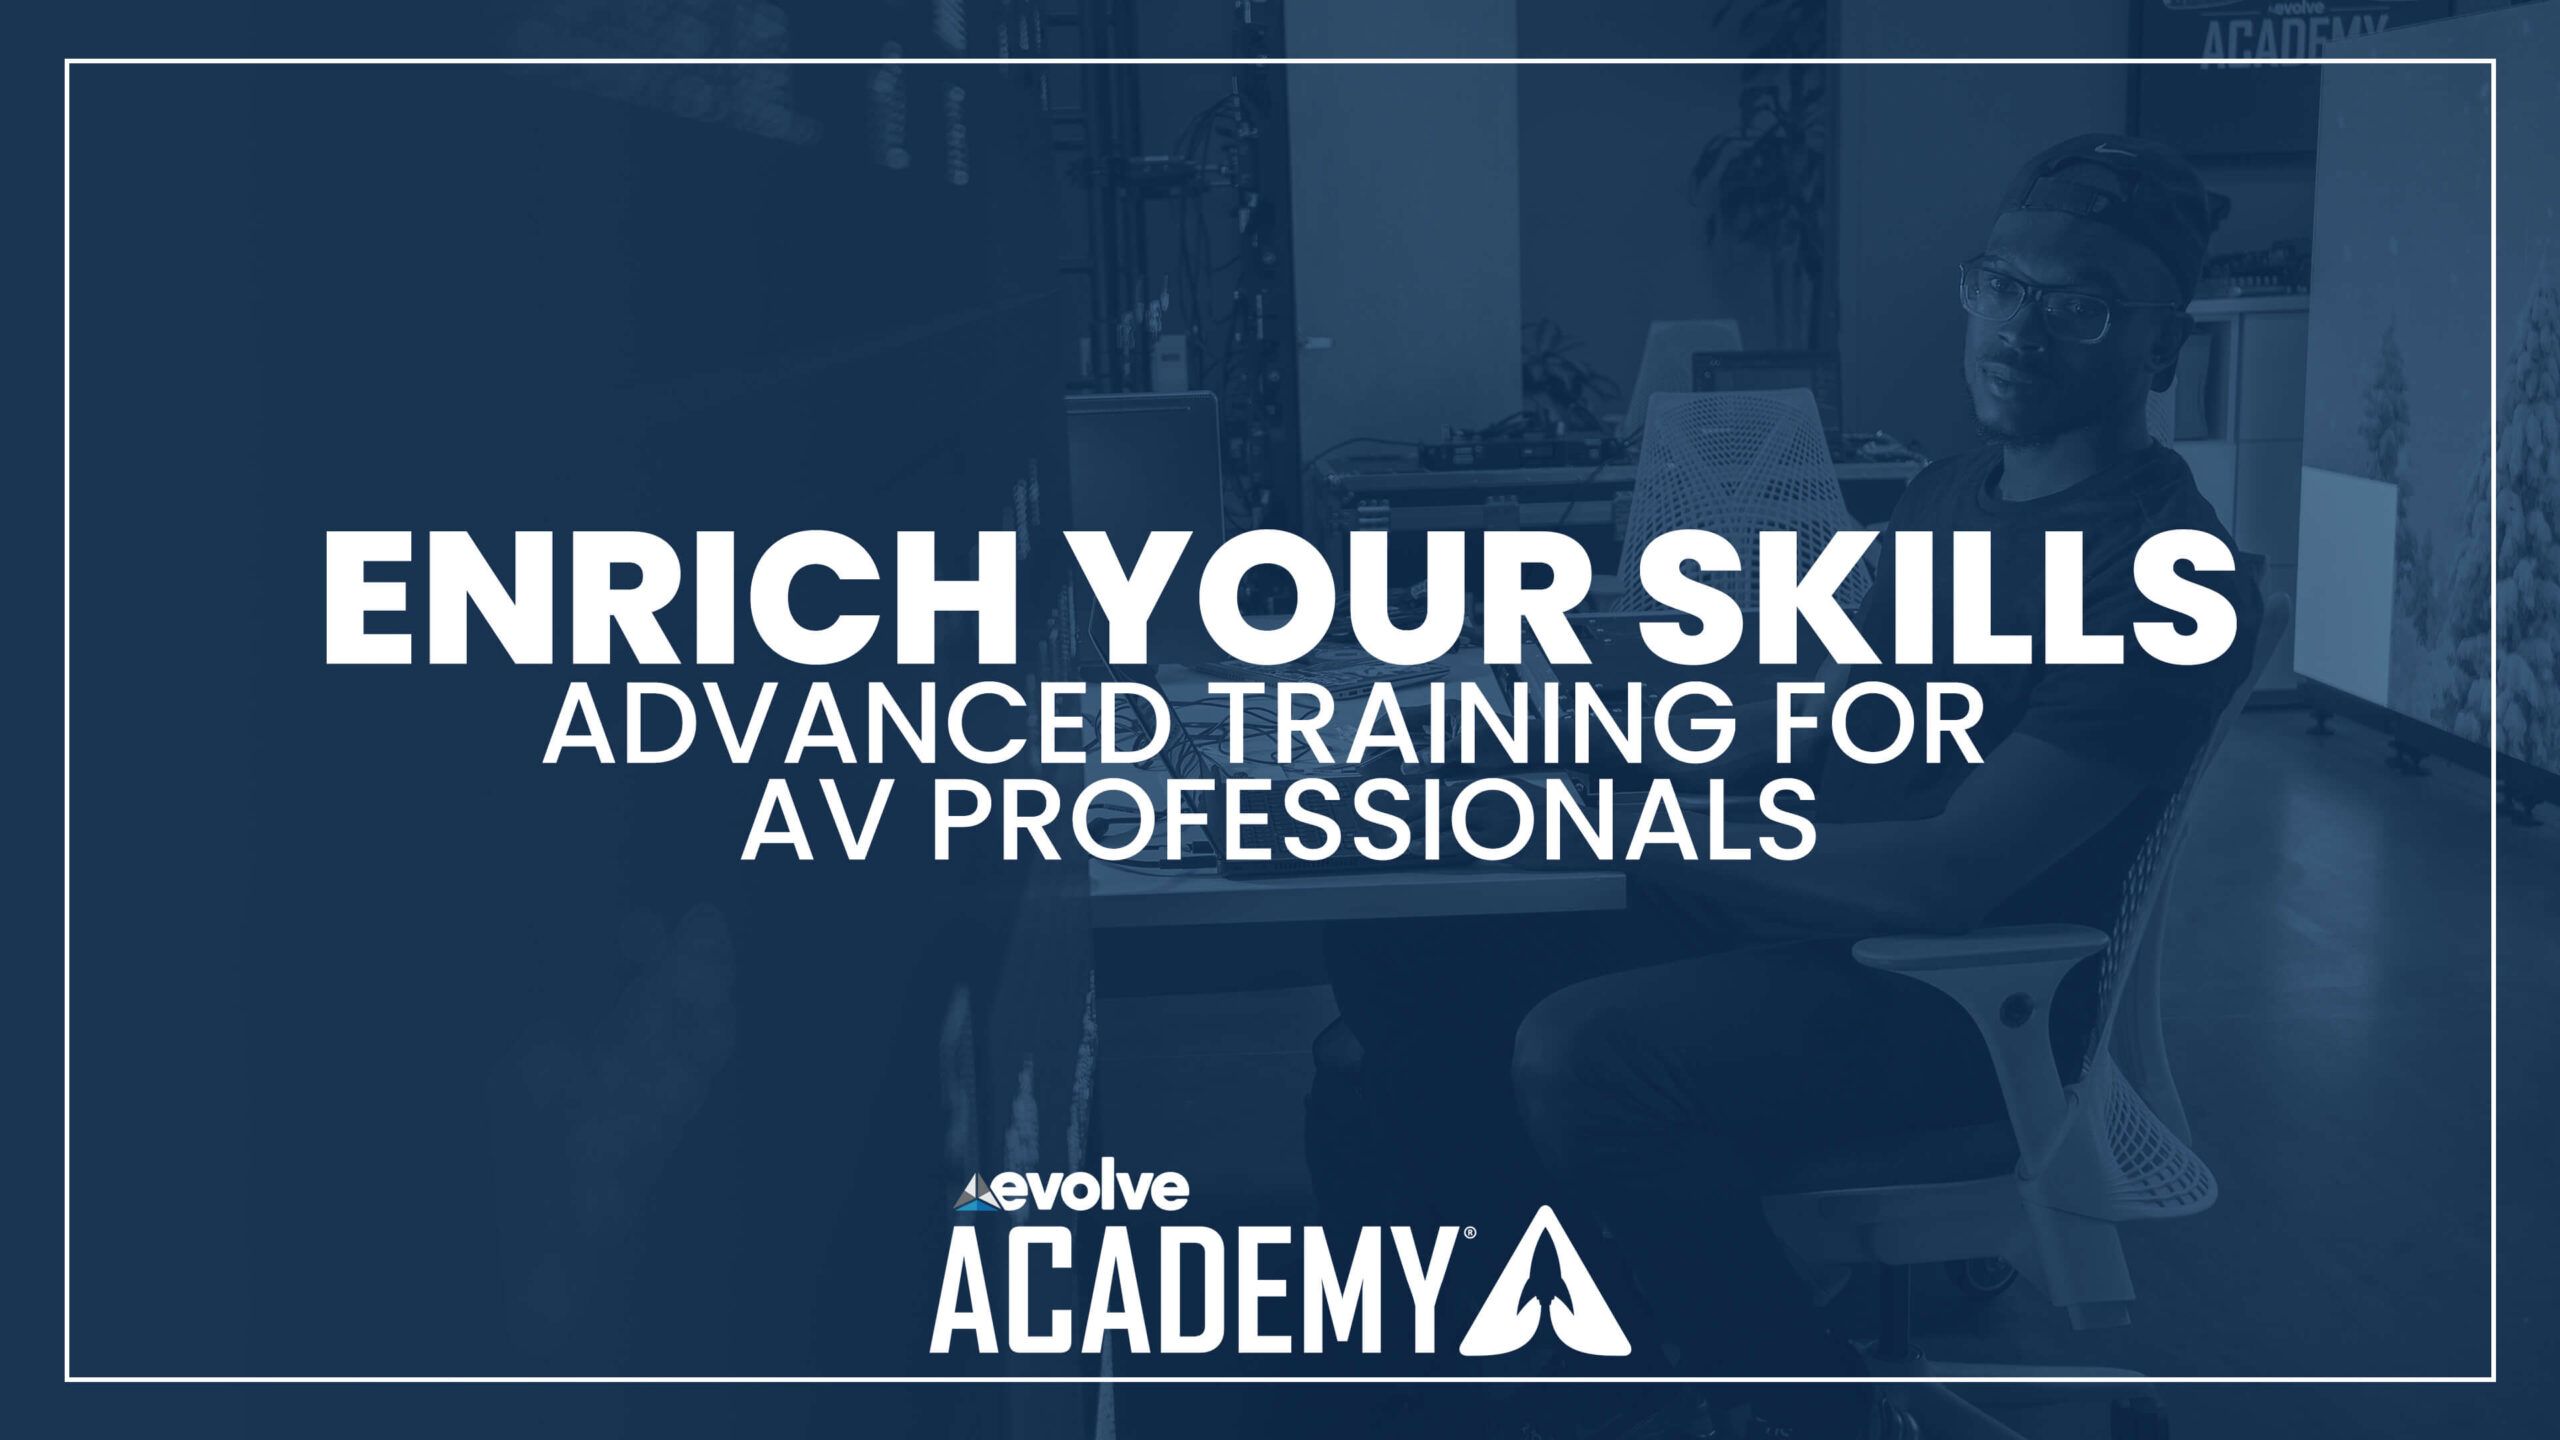 Enrich your skills advanced training for av professionals.